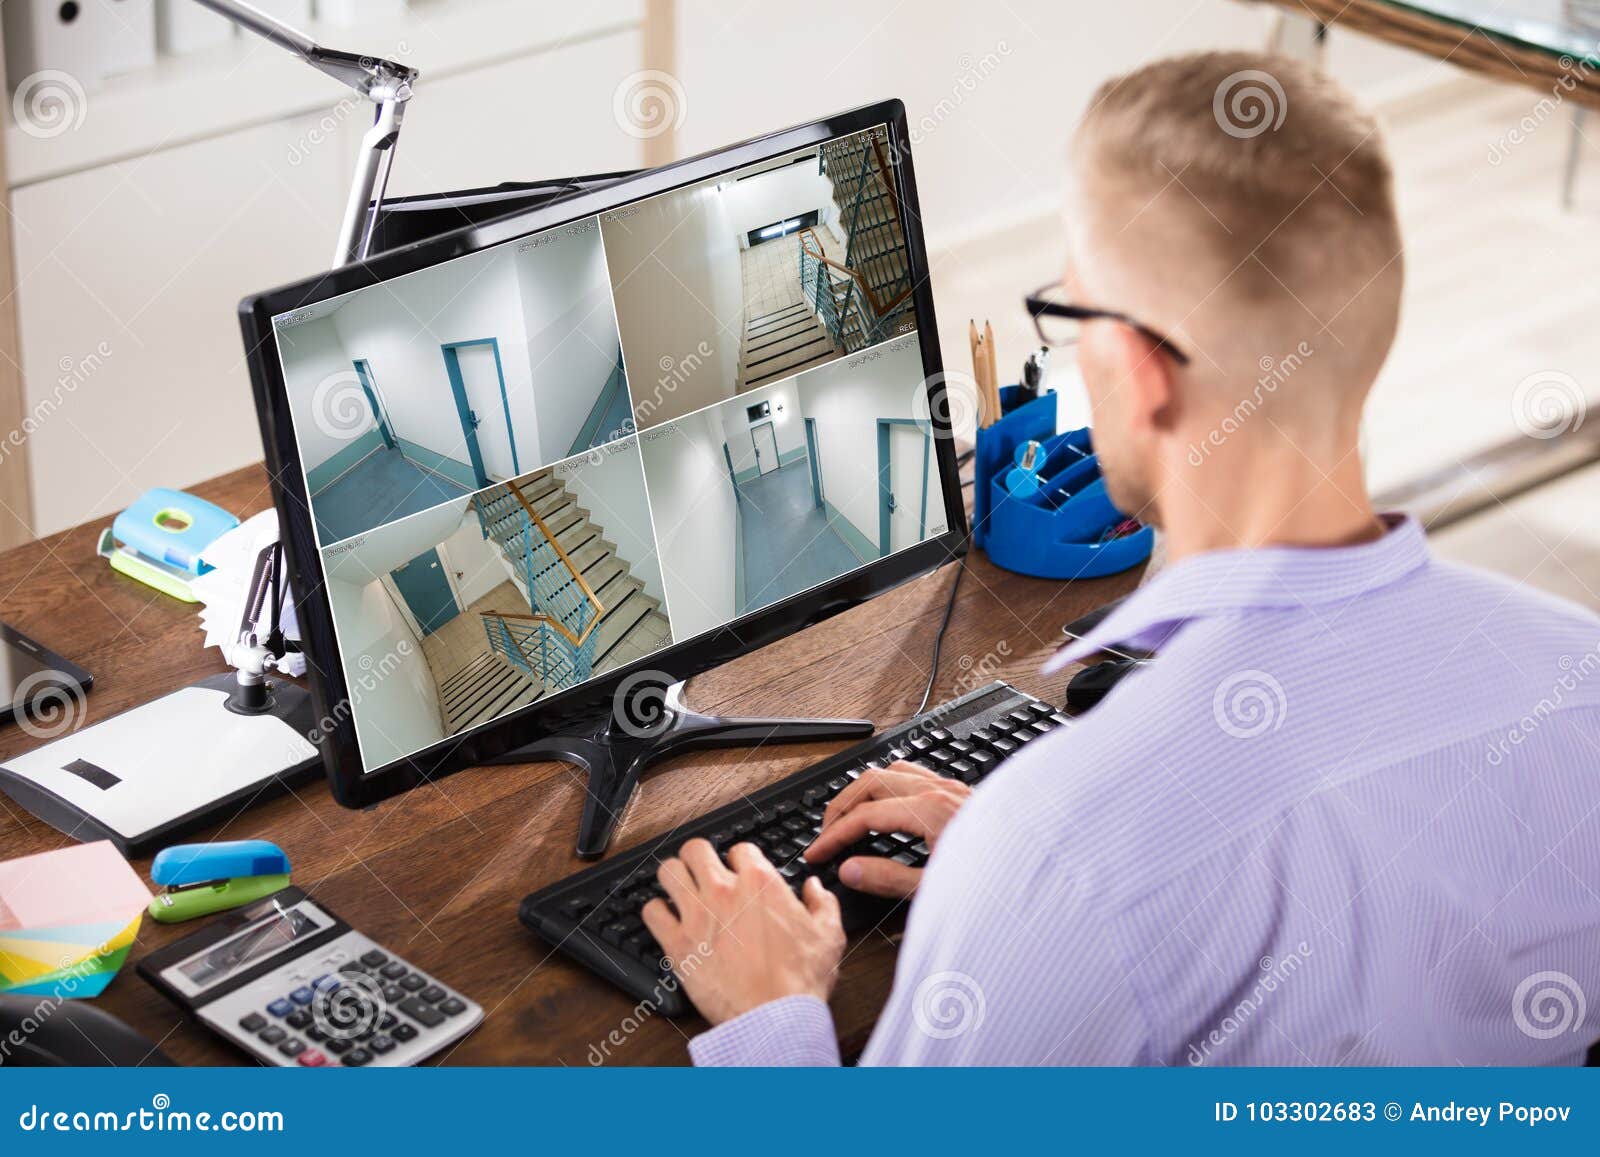 businessman looking at cctv footage on computer